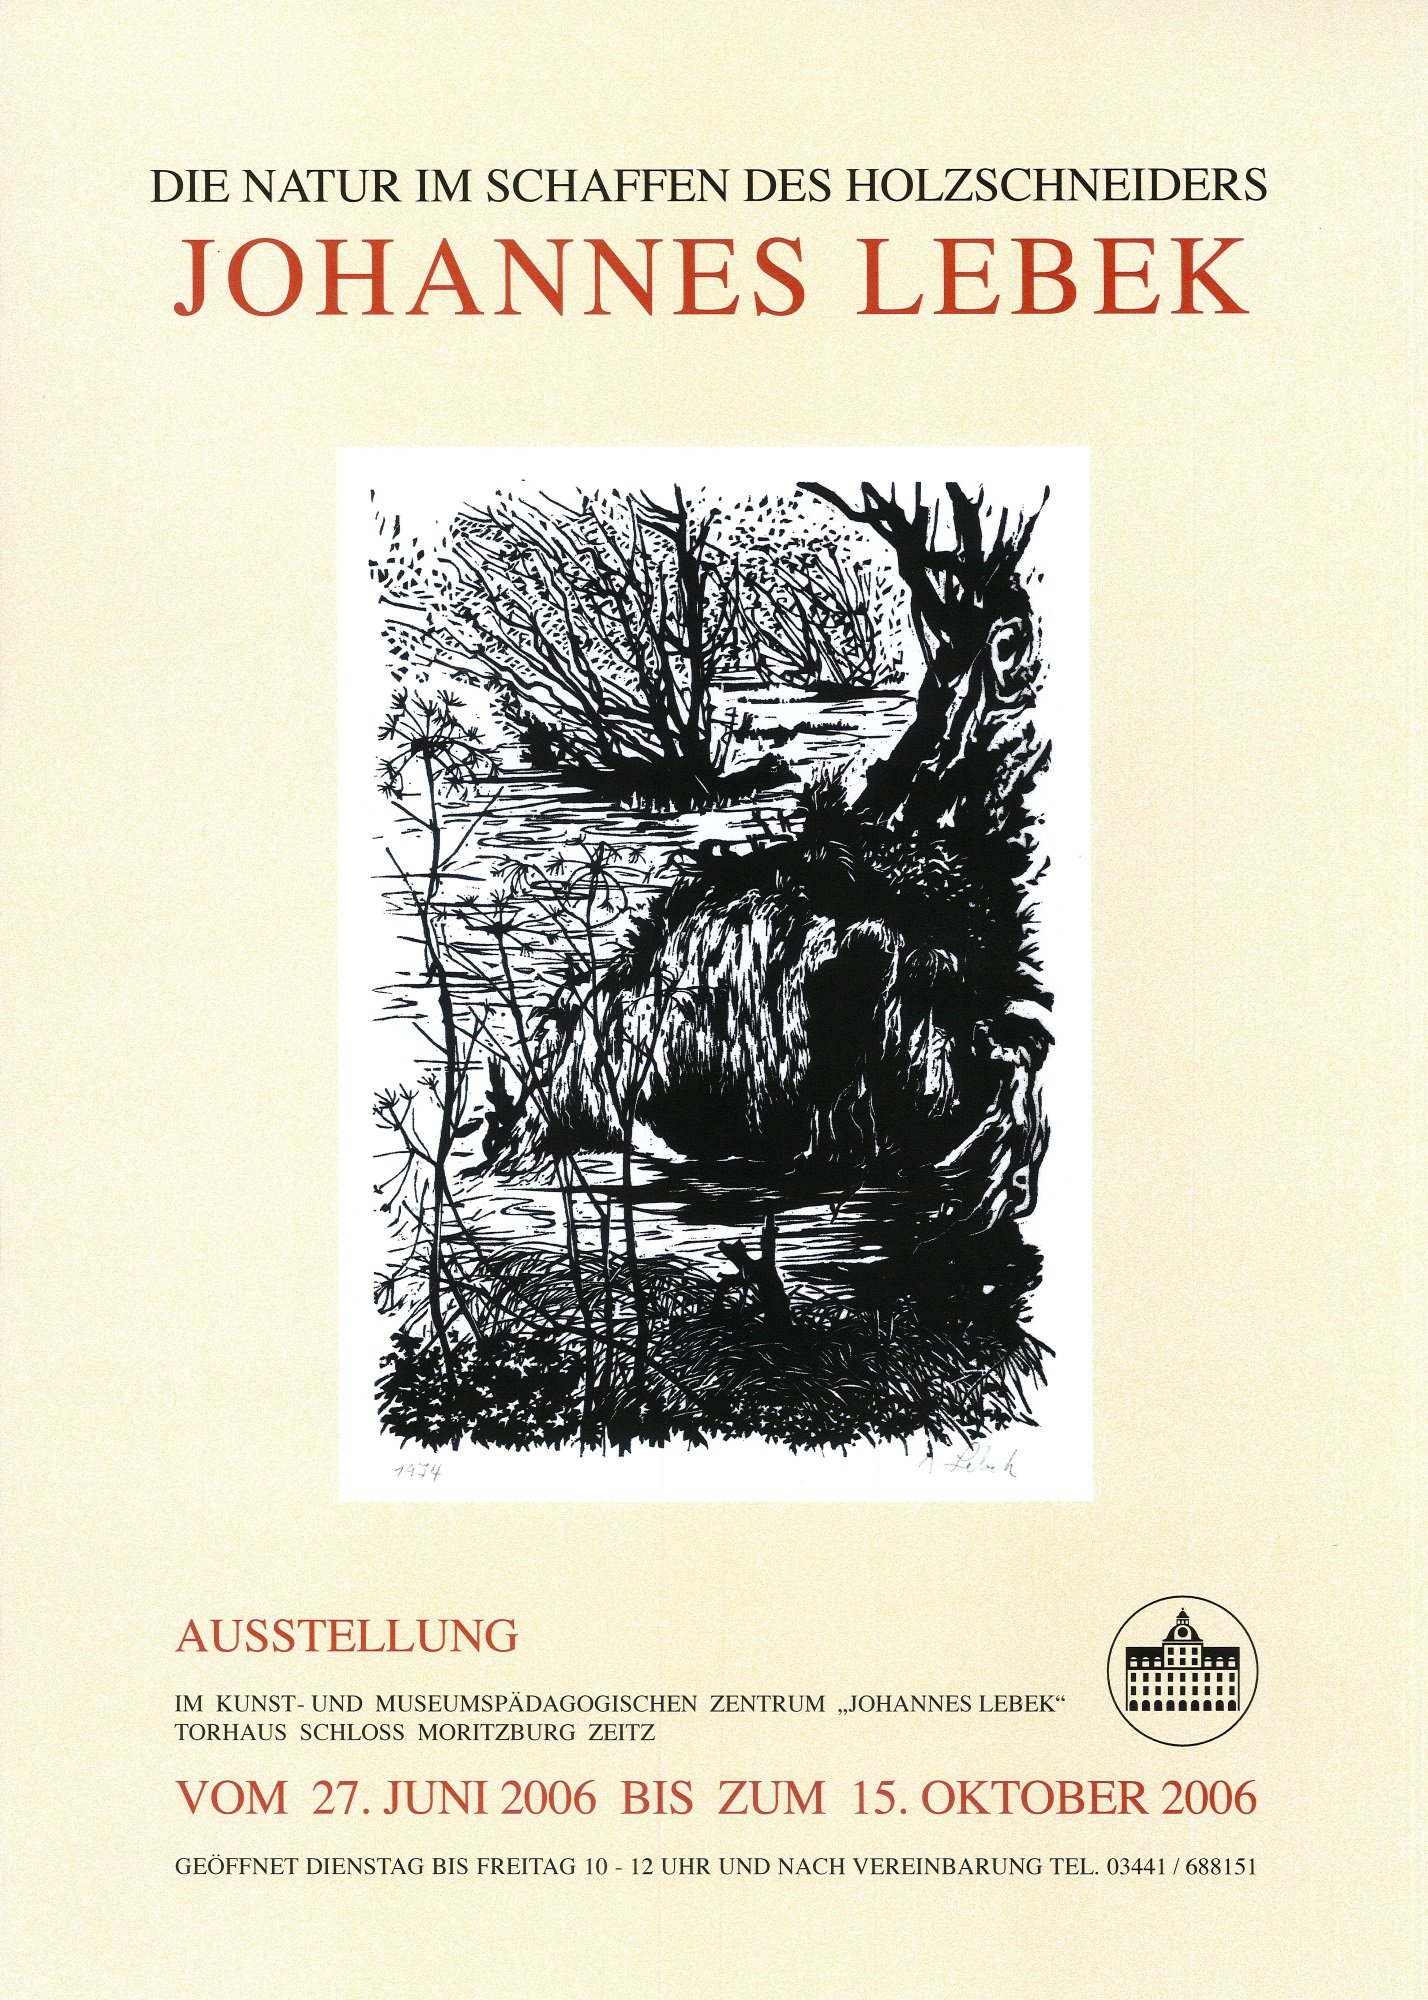 Ausstellungsplakat "Die Natur im Schaffen des Holzschneiders. Johannes Lebek" (Museum Schloss Moritzburg Zeitz RR-R)